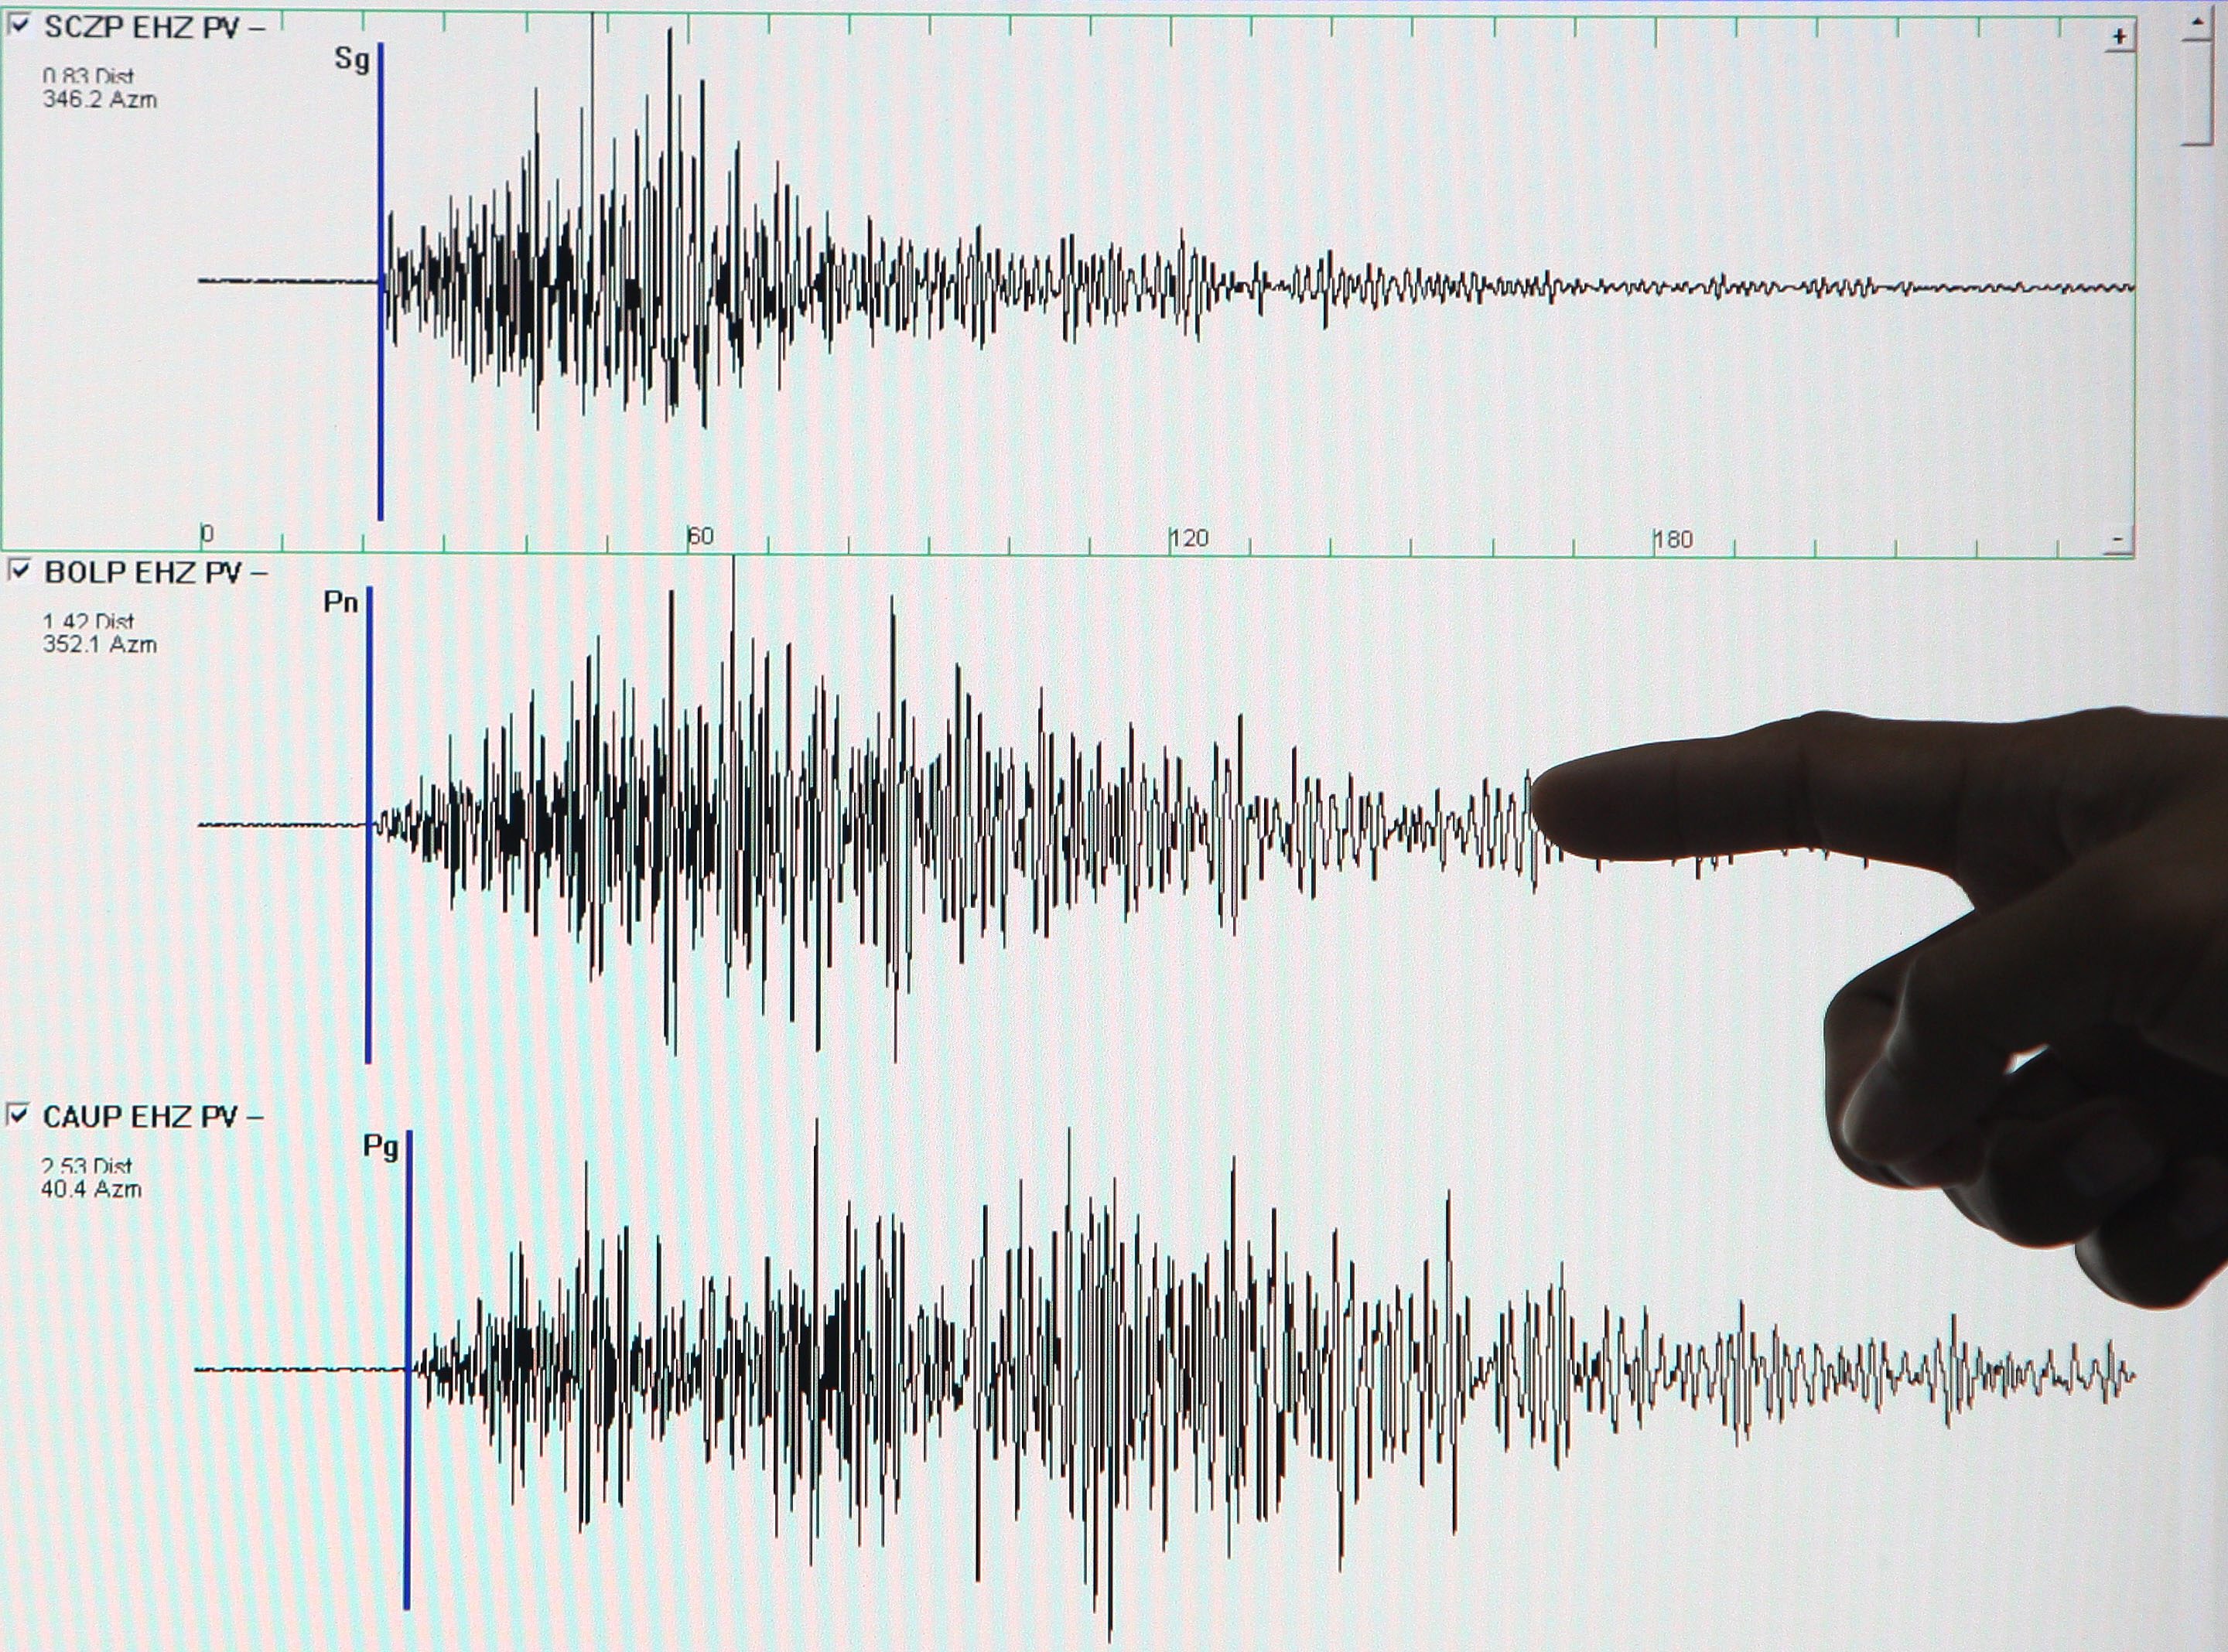 18 sismos registados na zona de Arraiolos este ano mas só 2 foram sentidos